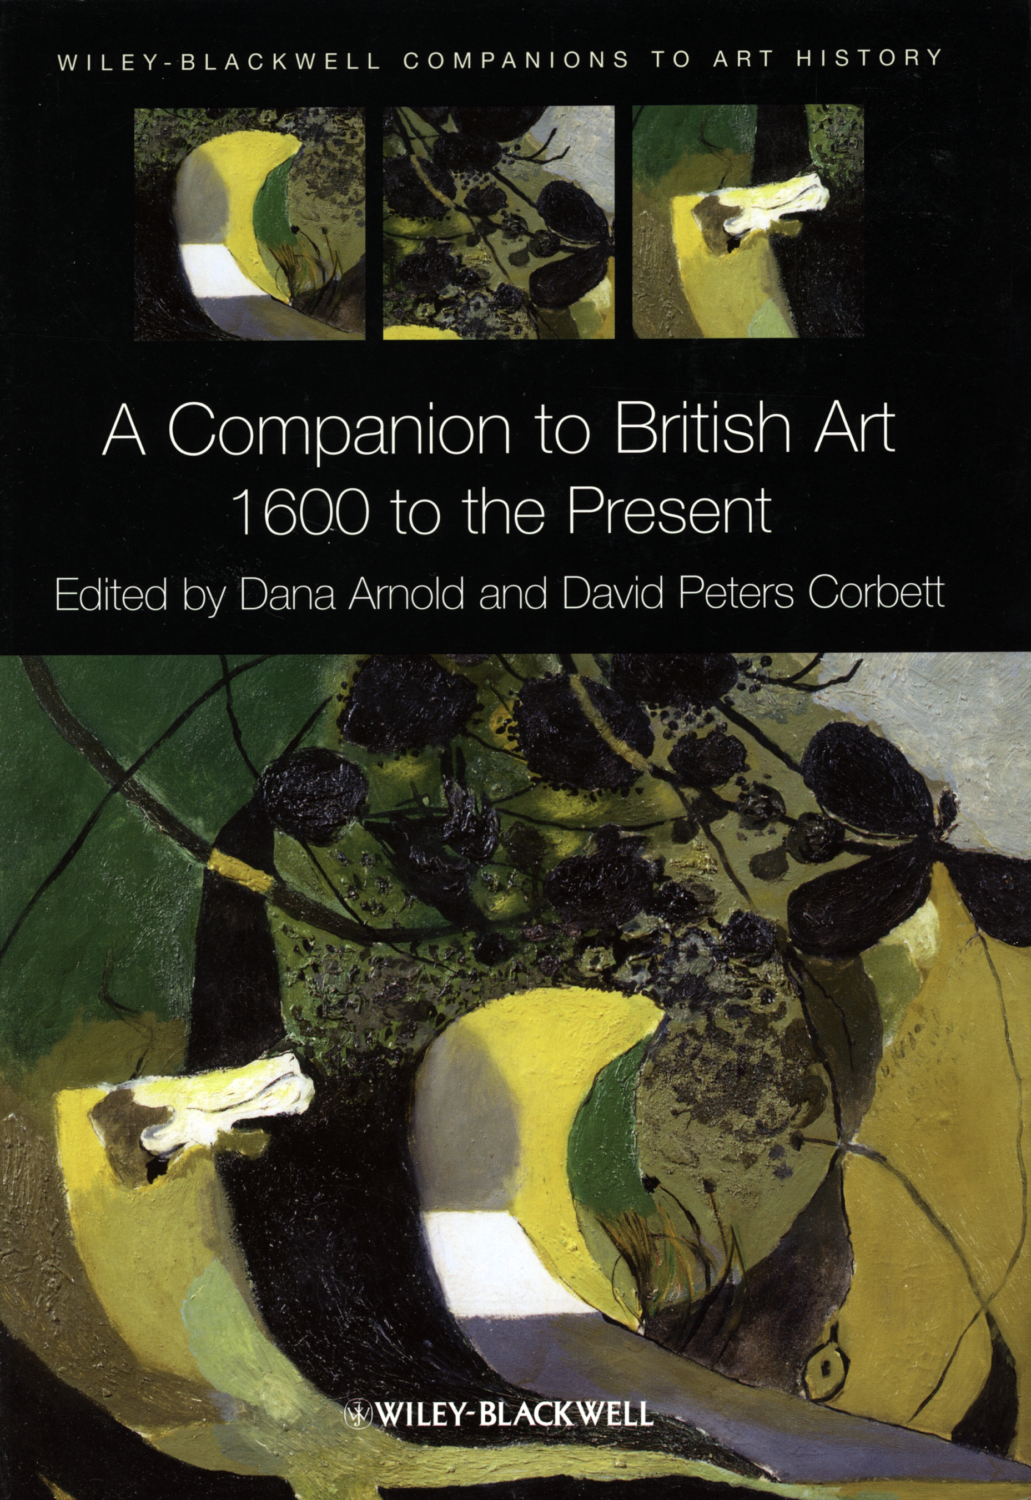 A companion to British Art 1600 to the Present